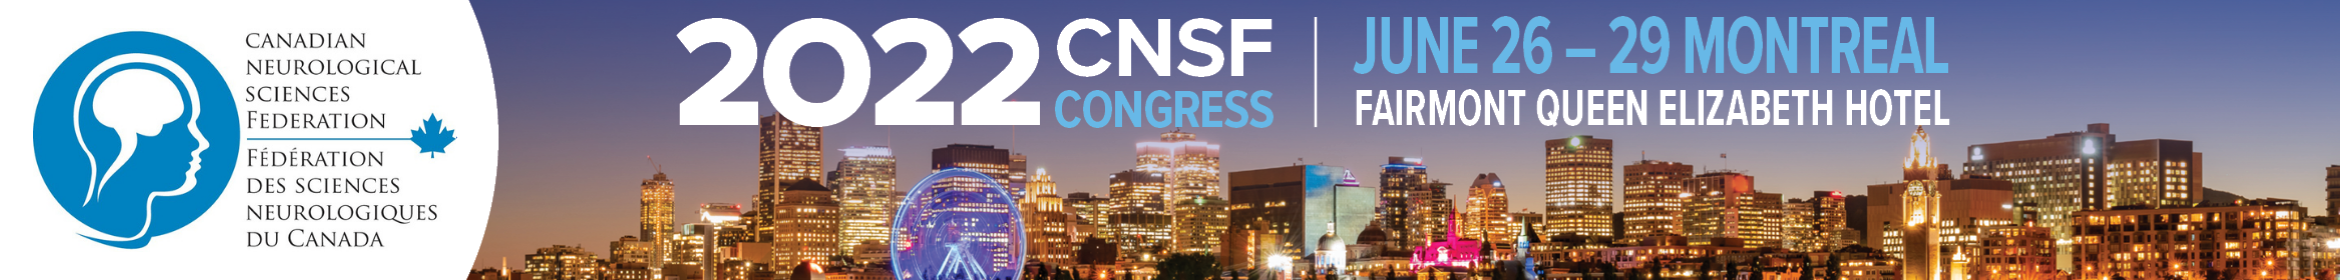 2022 CNSF Congress Main banner